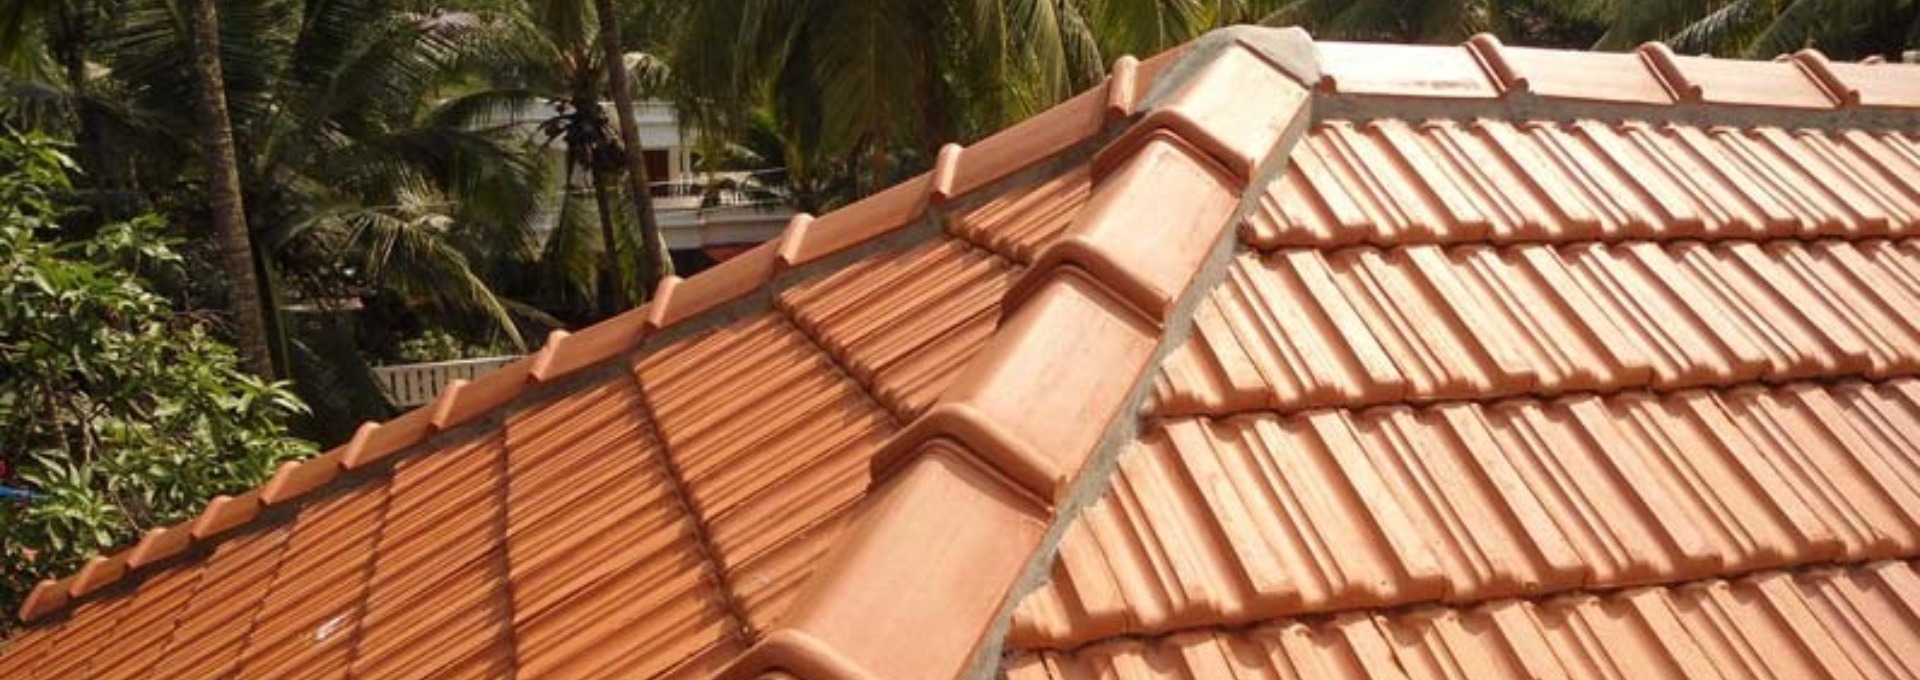 Roof Ridge Tiles